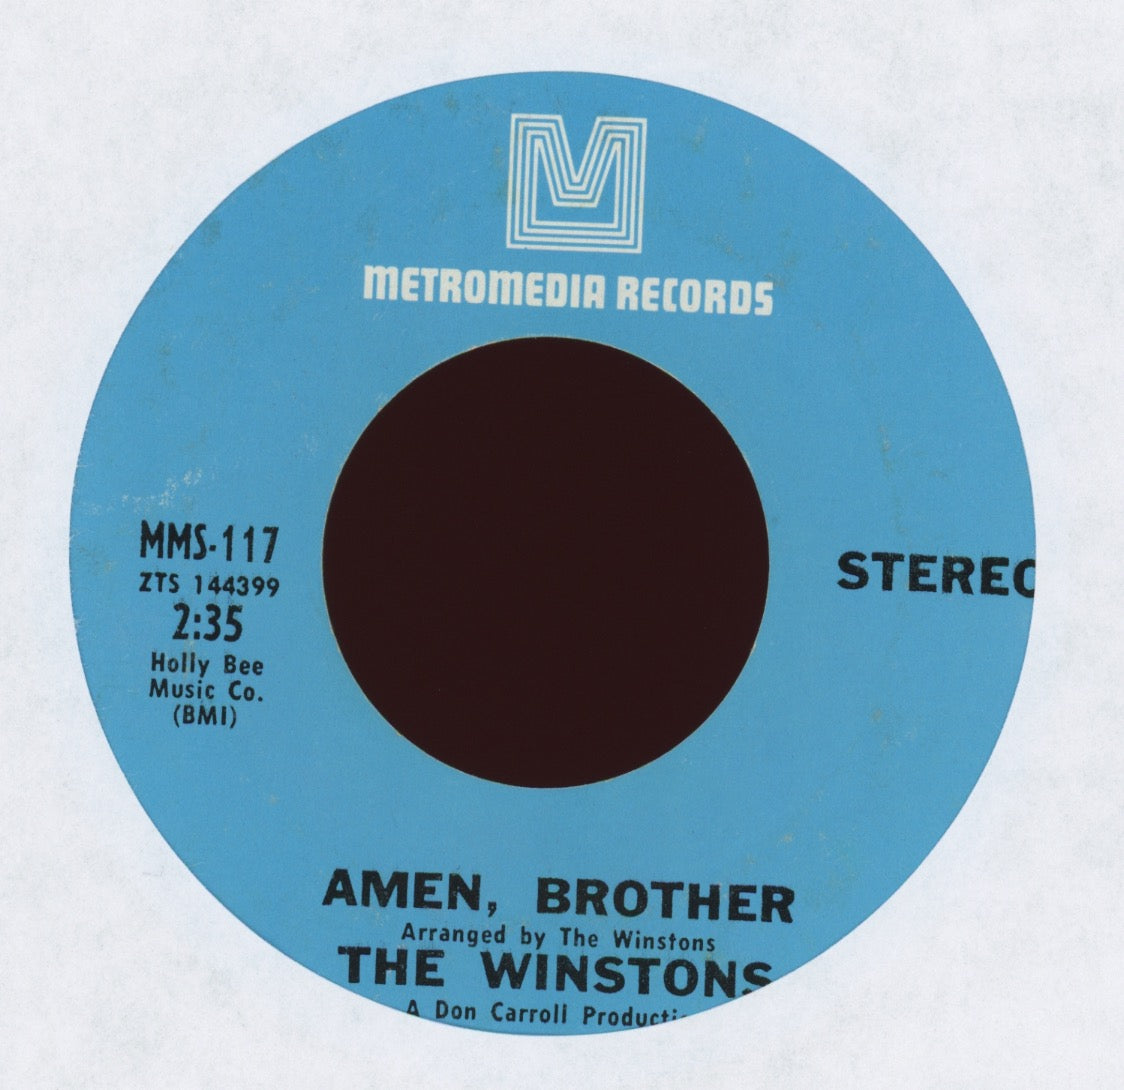 The Winstons - Amen, Brother on Metromedia